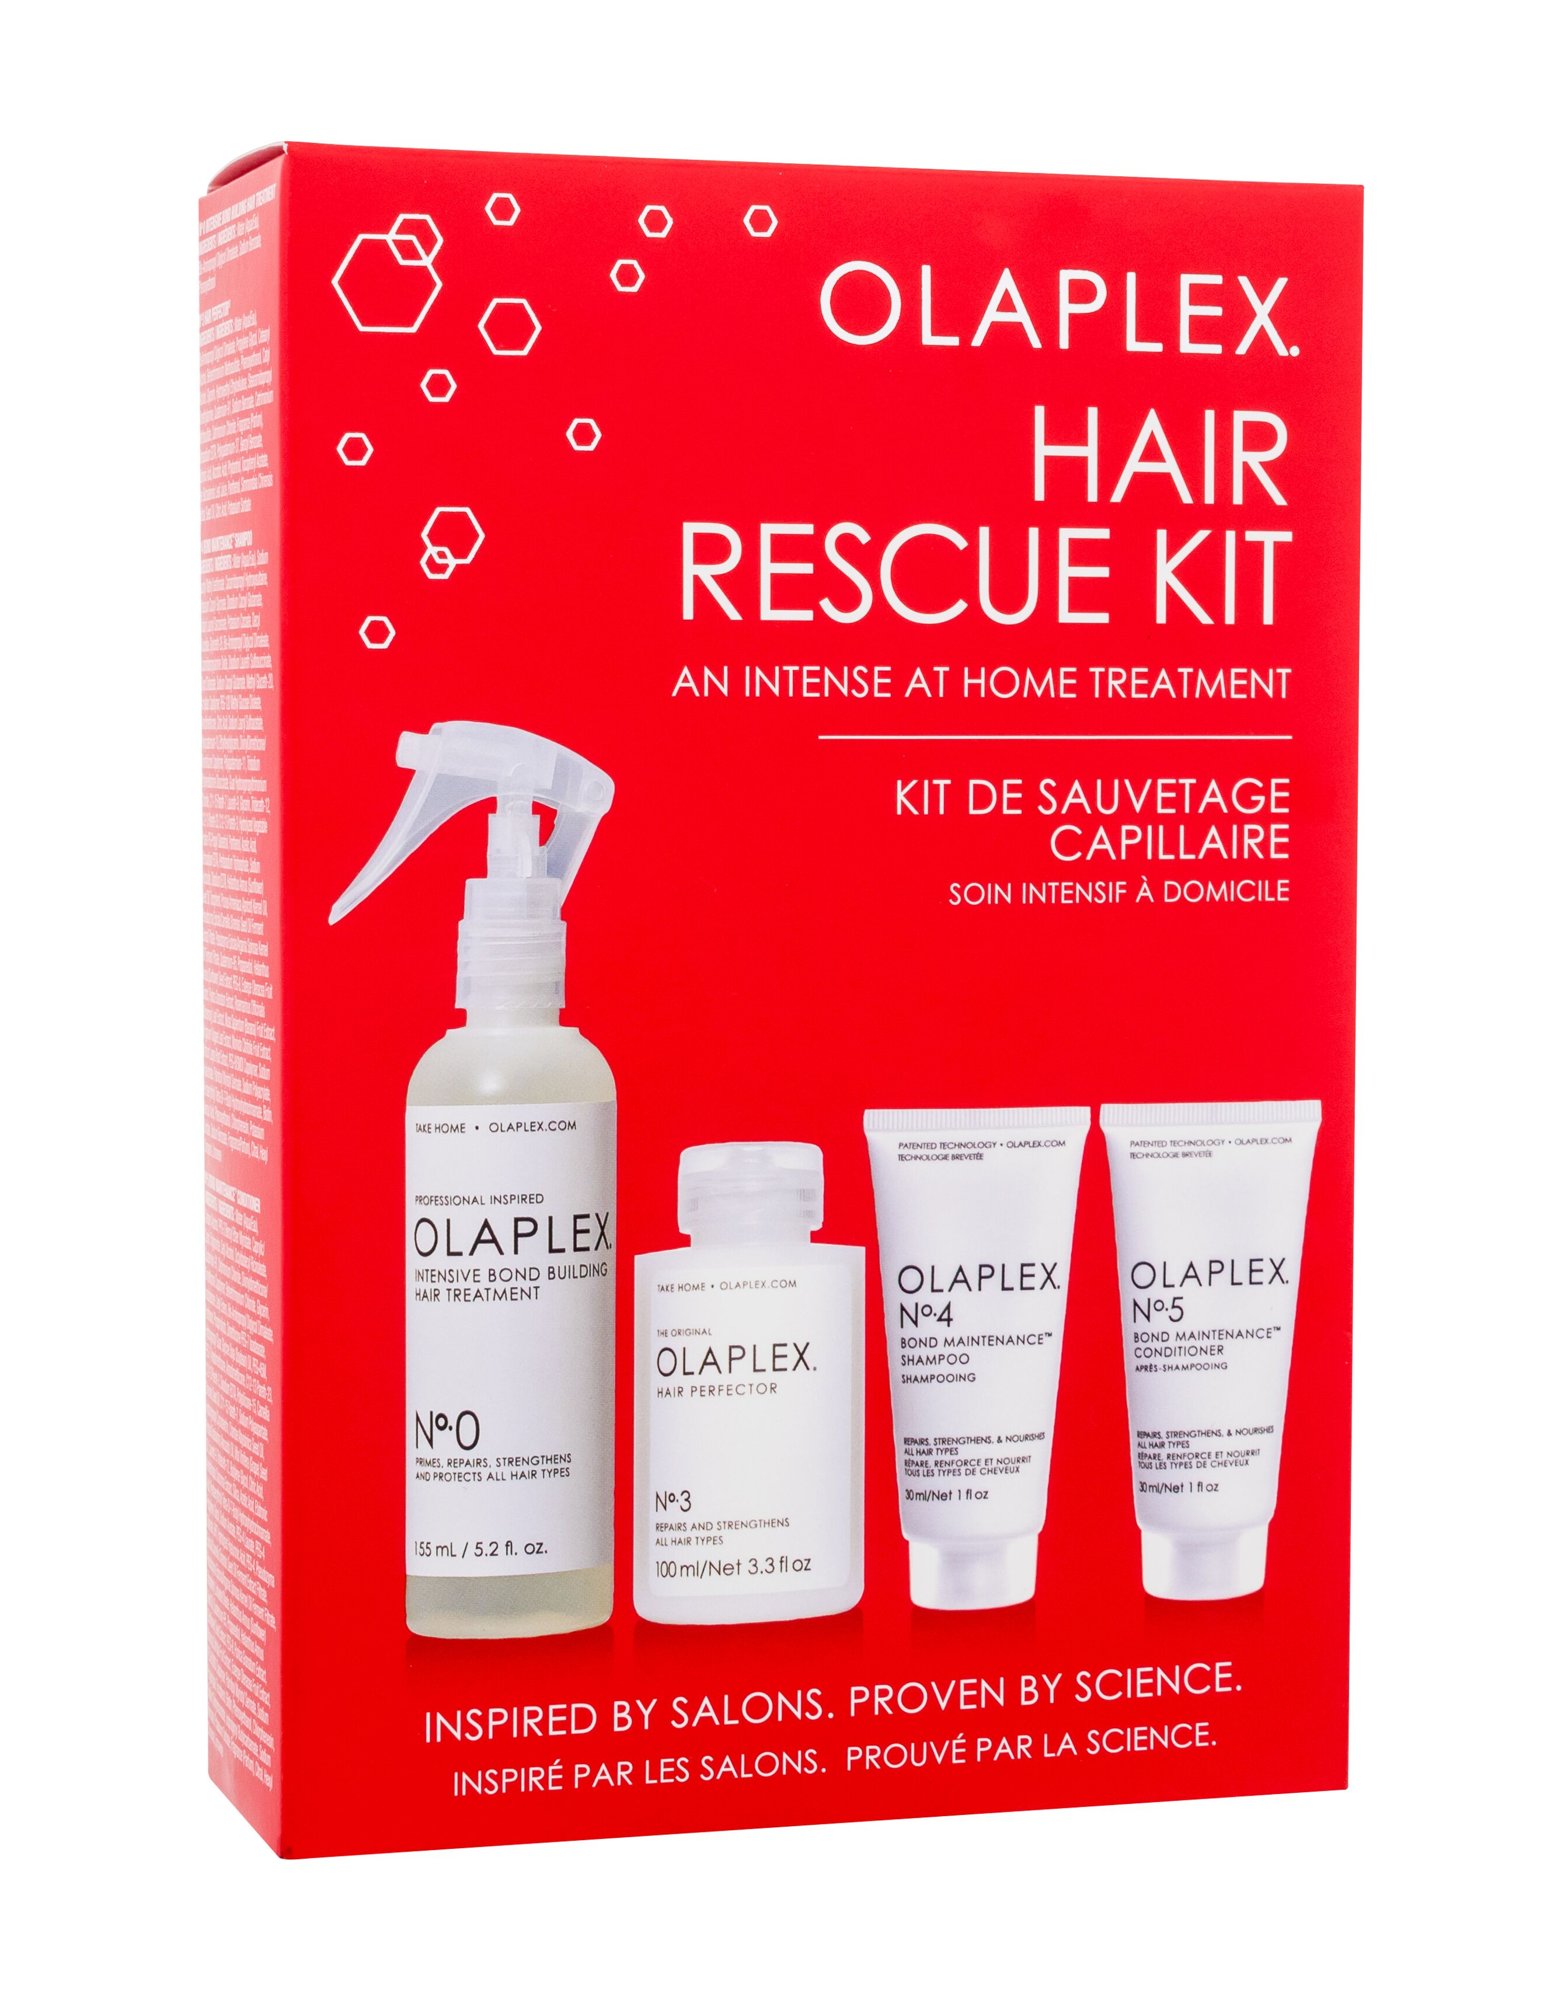 Olaplex Hair Rescue Kit 155ml Intensive Bond Building Hair Treatment No.0 155 ml + Hair Perfector No.3 100 ml + Bond Maintenance Shampoo No. 4 30 ml + Bond Maintenance Conditioner No. 5 30 ml plaukų serumas Rinkinys